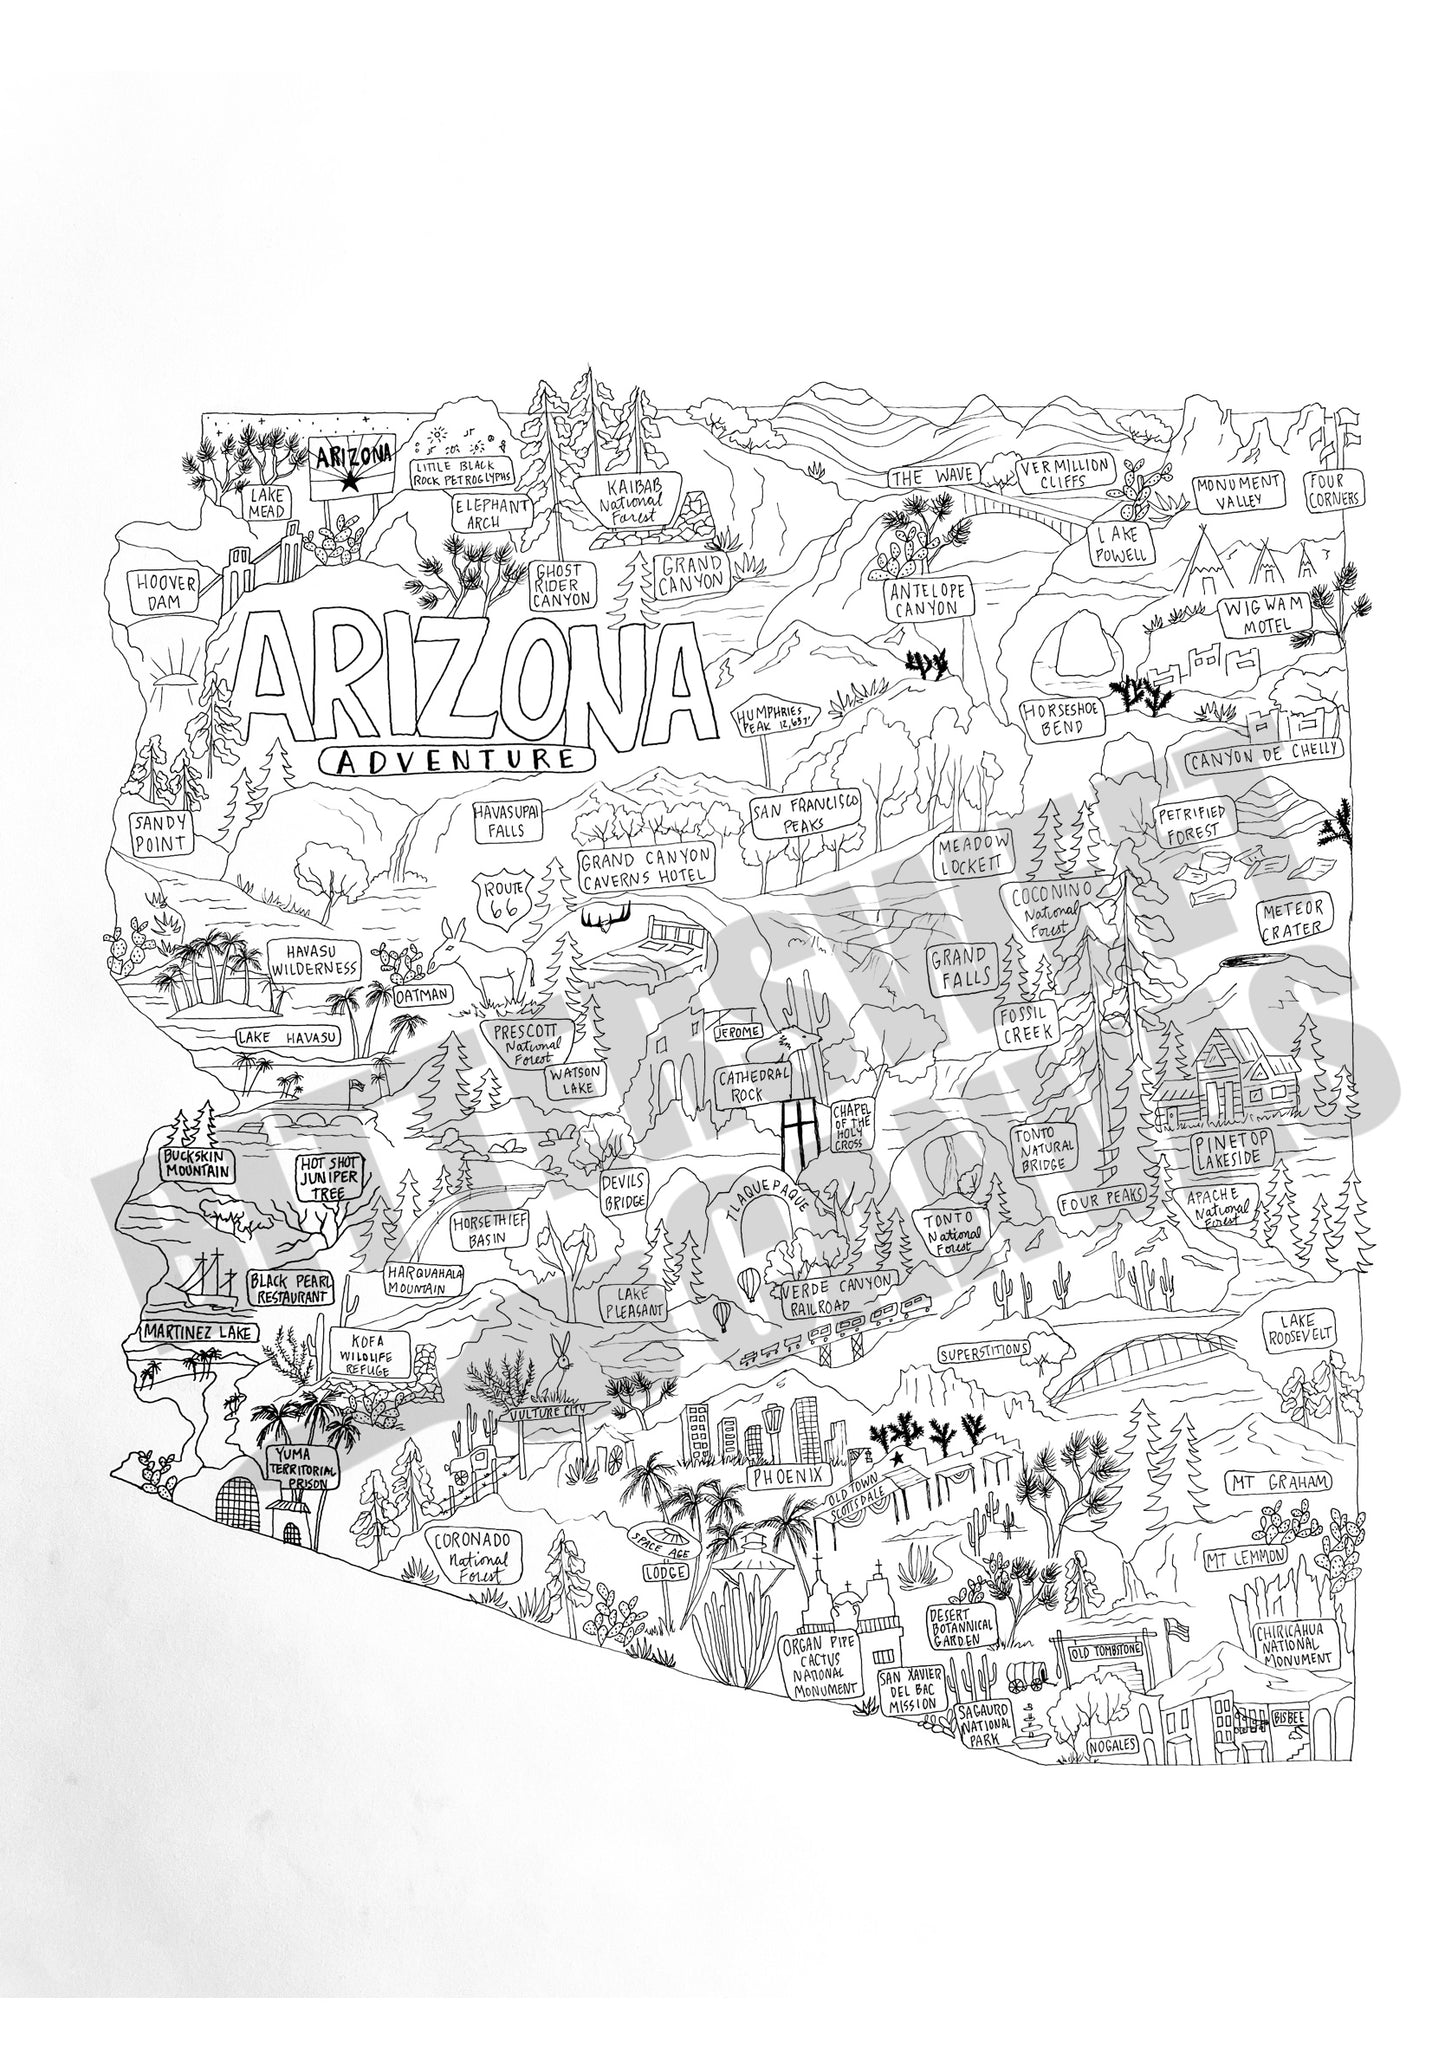 Arizona adventure map coloring page DIGITAL DOWNLOAD